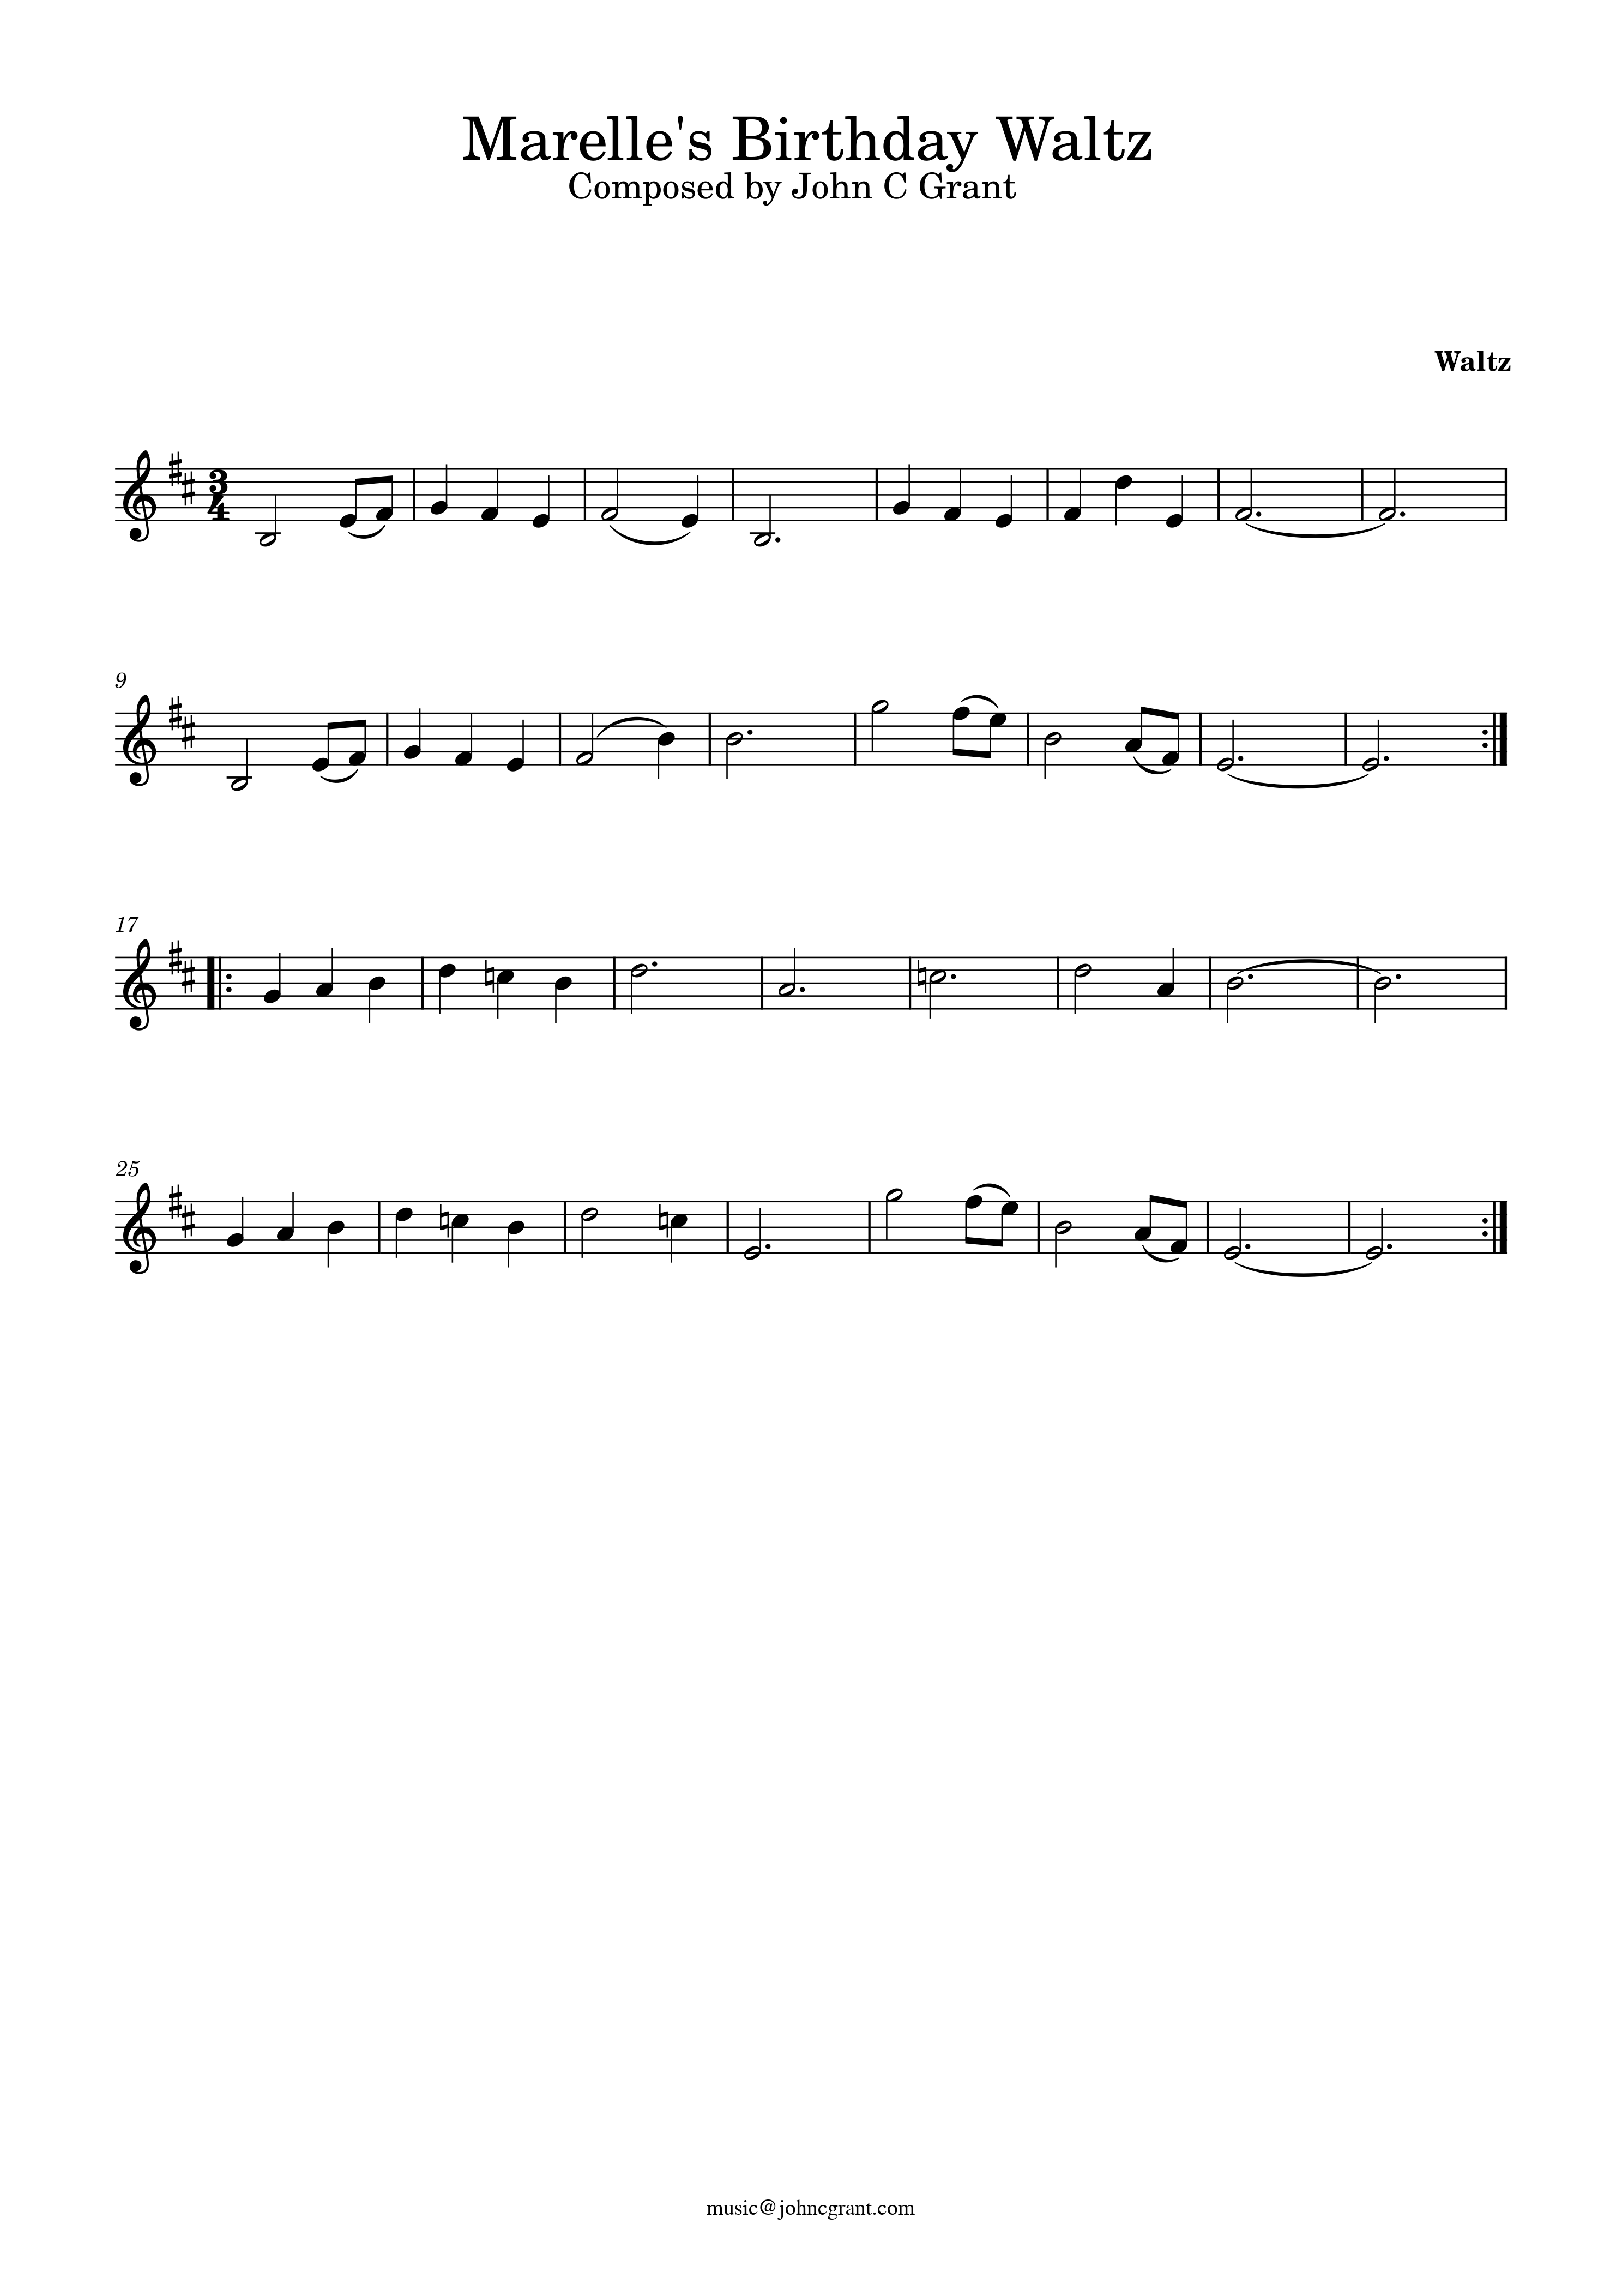 Marelle's Birthday Waltz - Composed by John C Grant (https://johncgrant.com). Traditional composer from Kilmarnock, Ayrshire, Scotland.